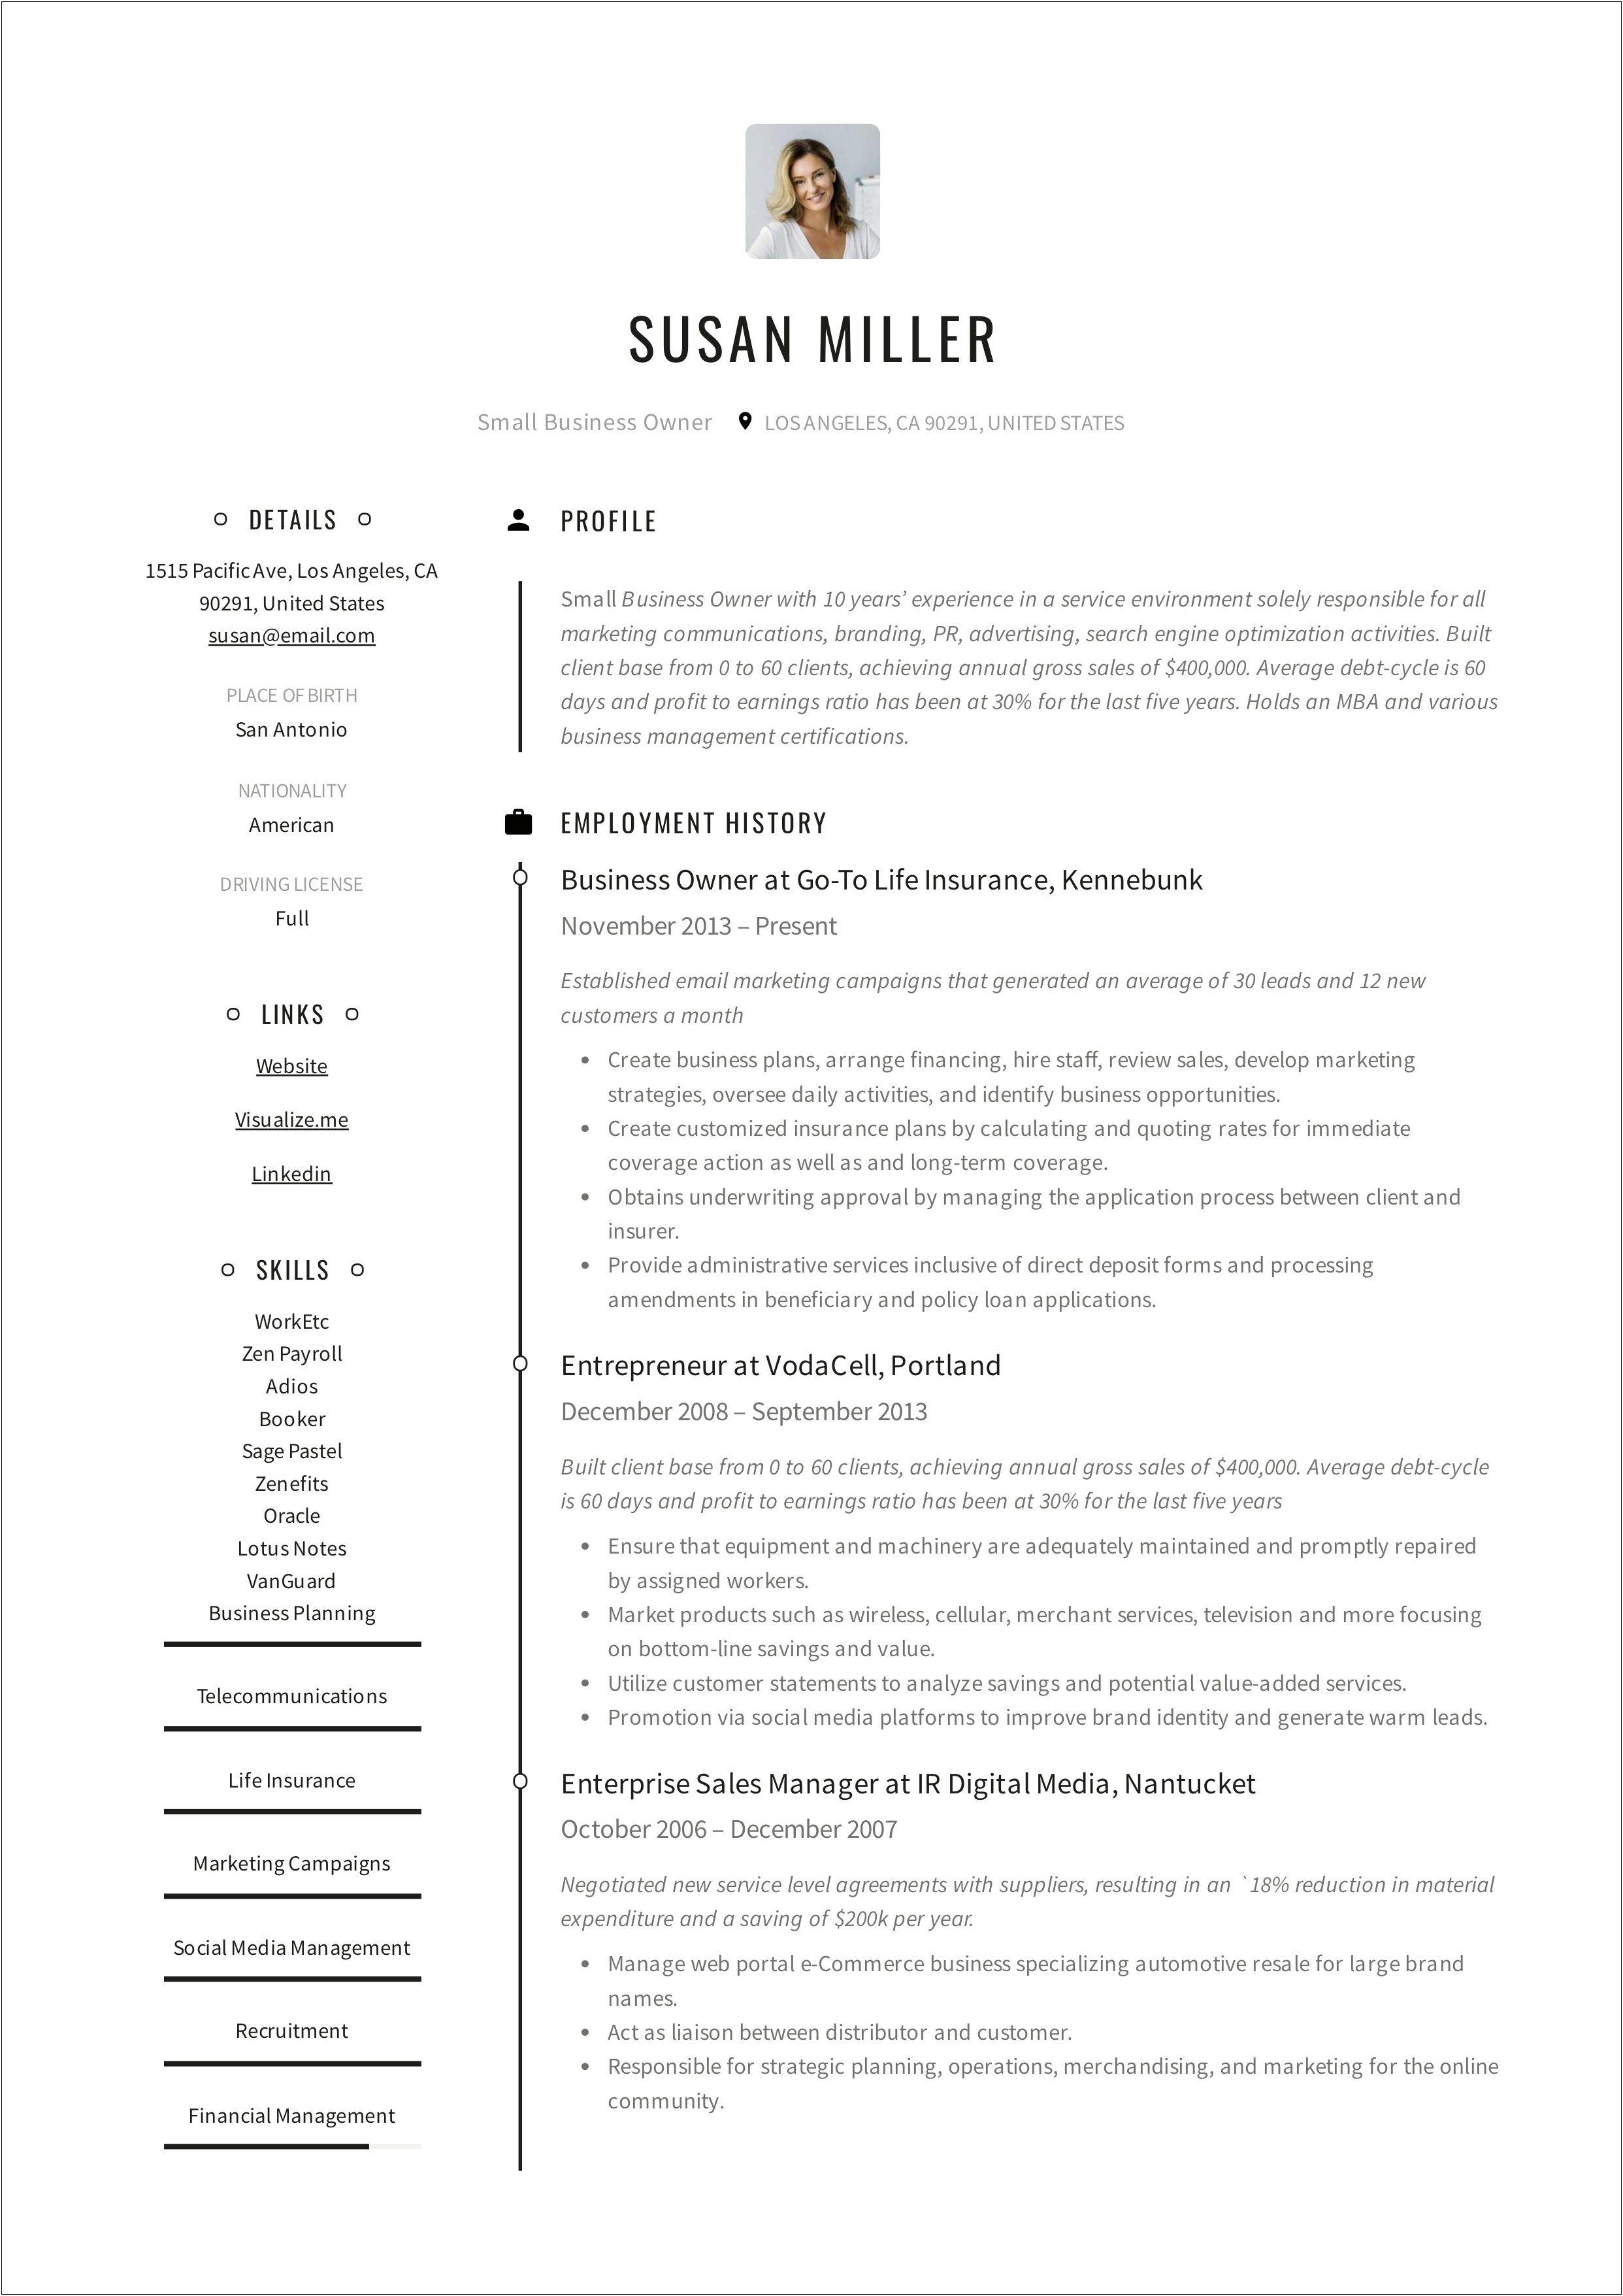 Job Description For Self Employed Business Owner Resume